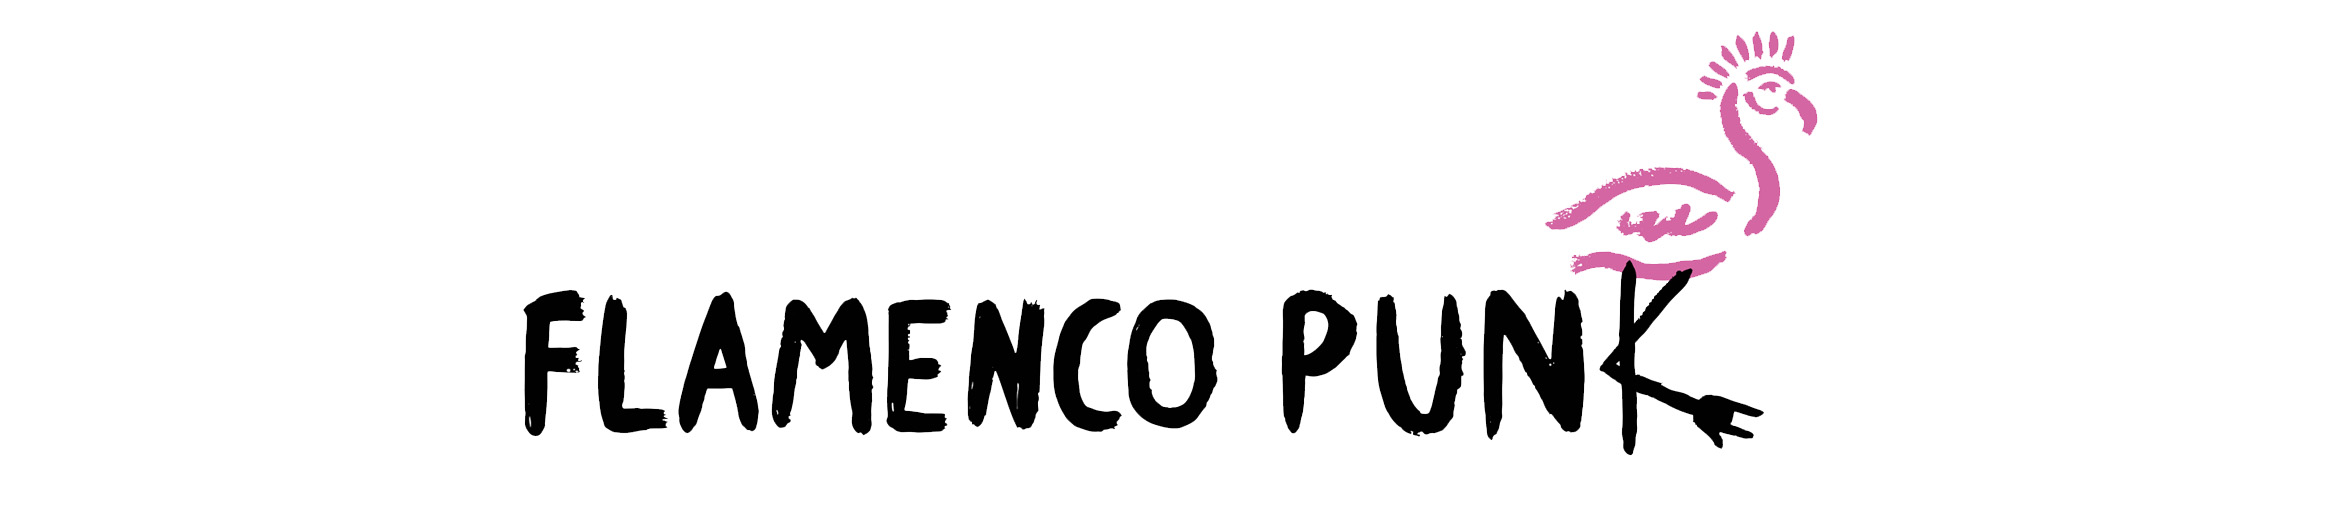 Flamenco-Punk-Ferpectamente